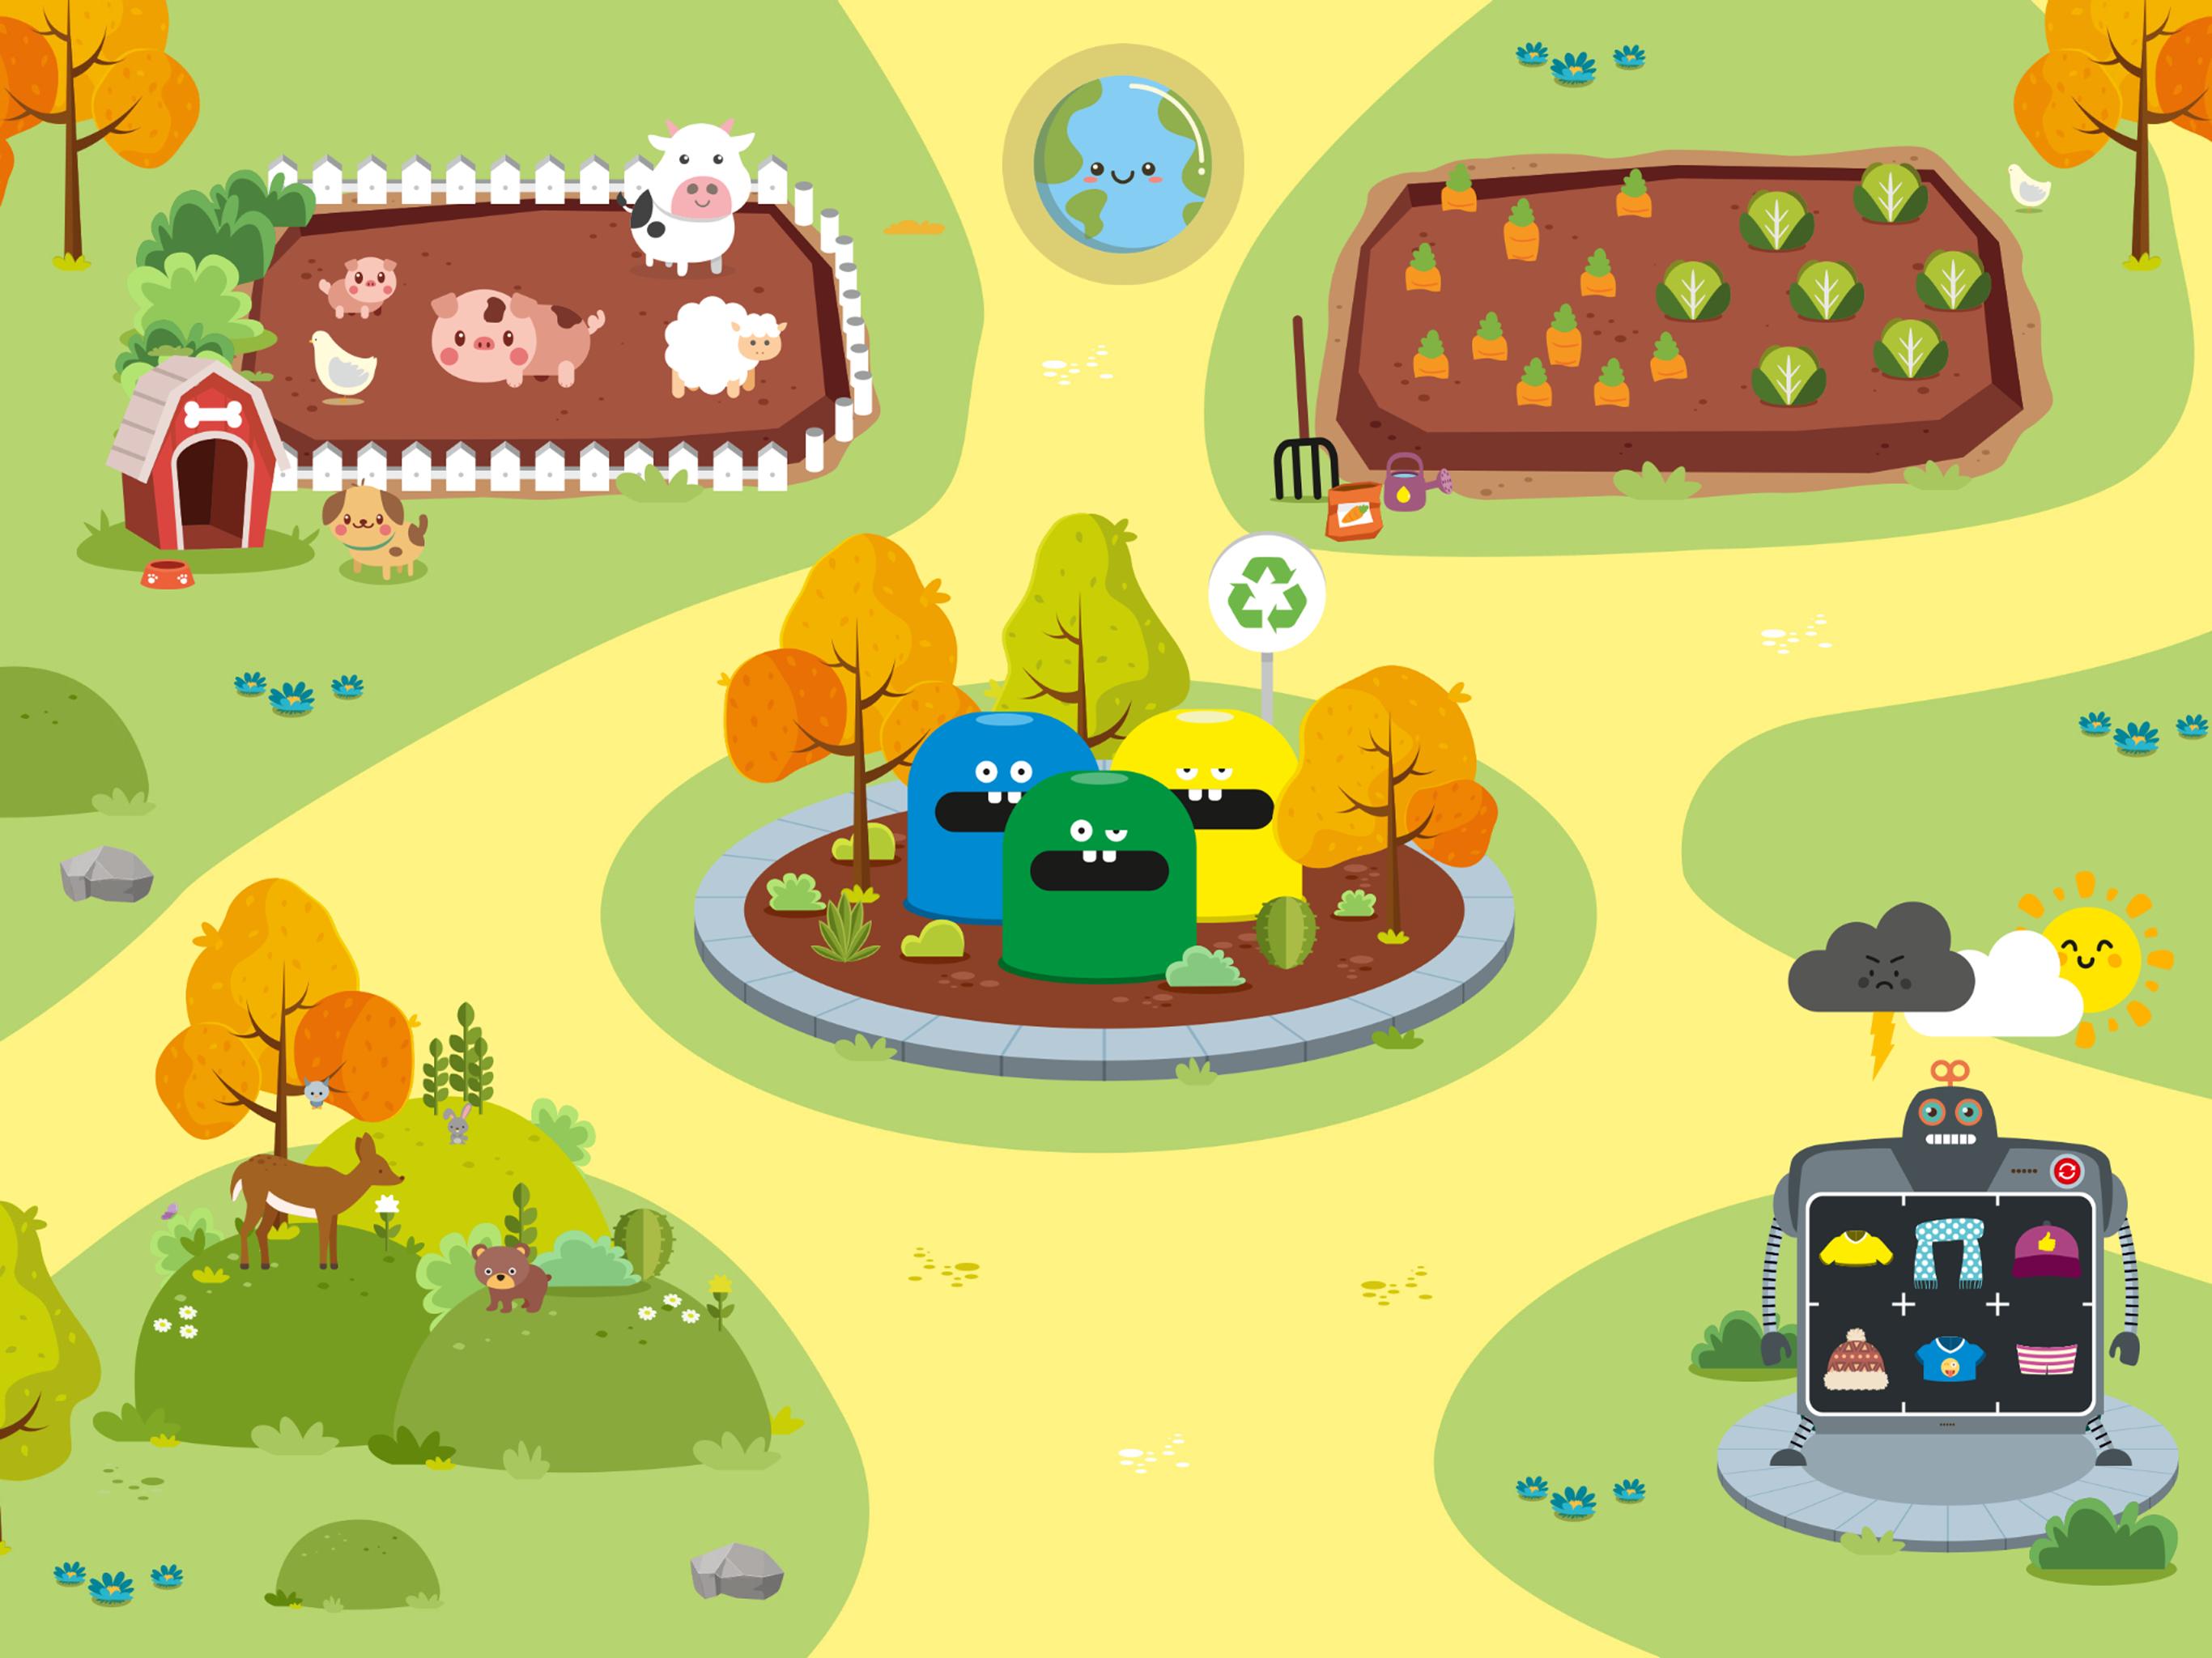 Mobile games for Kids. Edu Kids games. Nature for Kids cleverbit. SAYHI Kids games. Kids game app